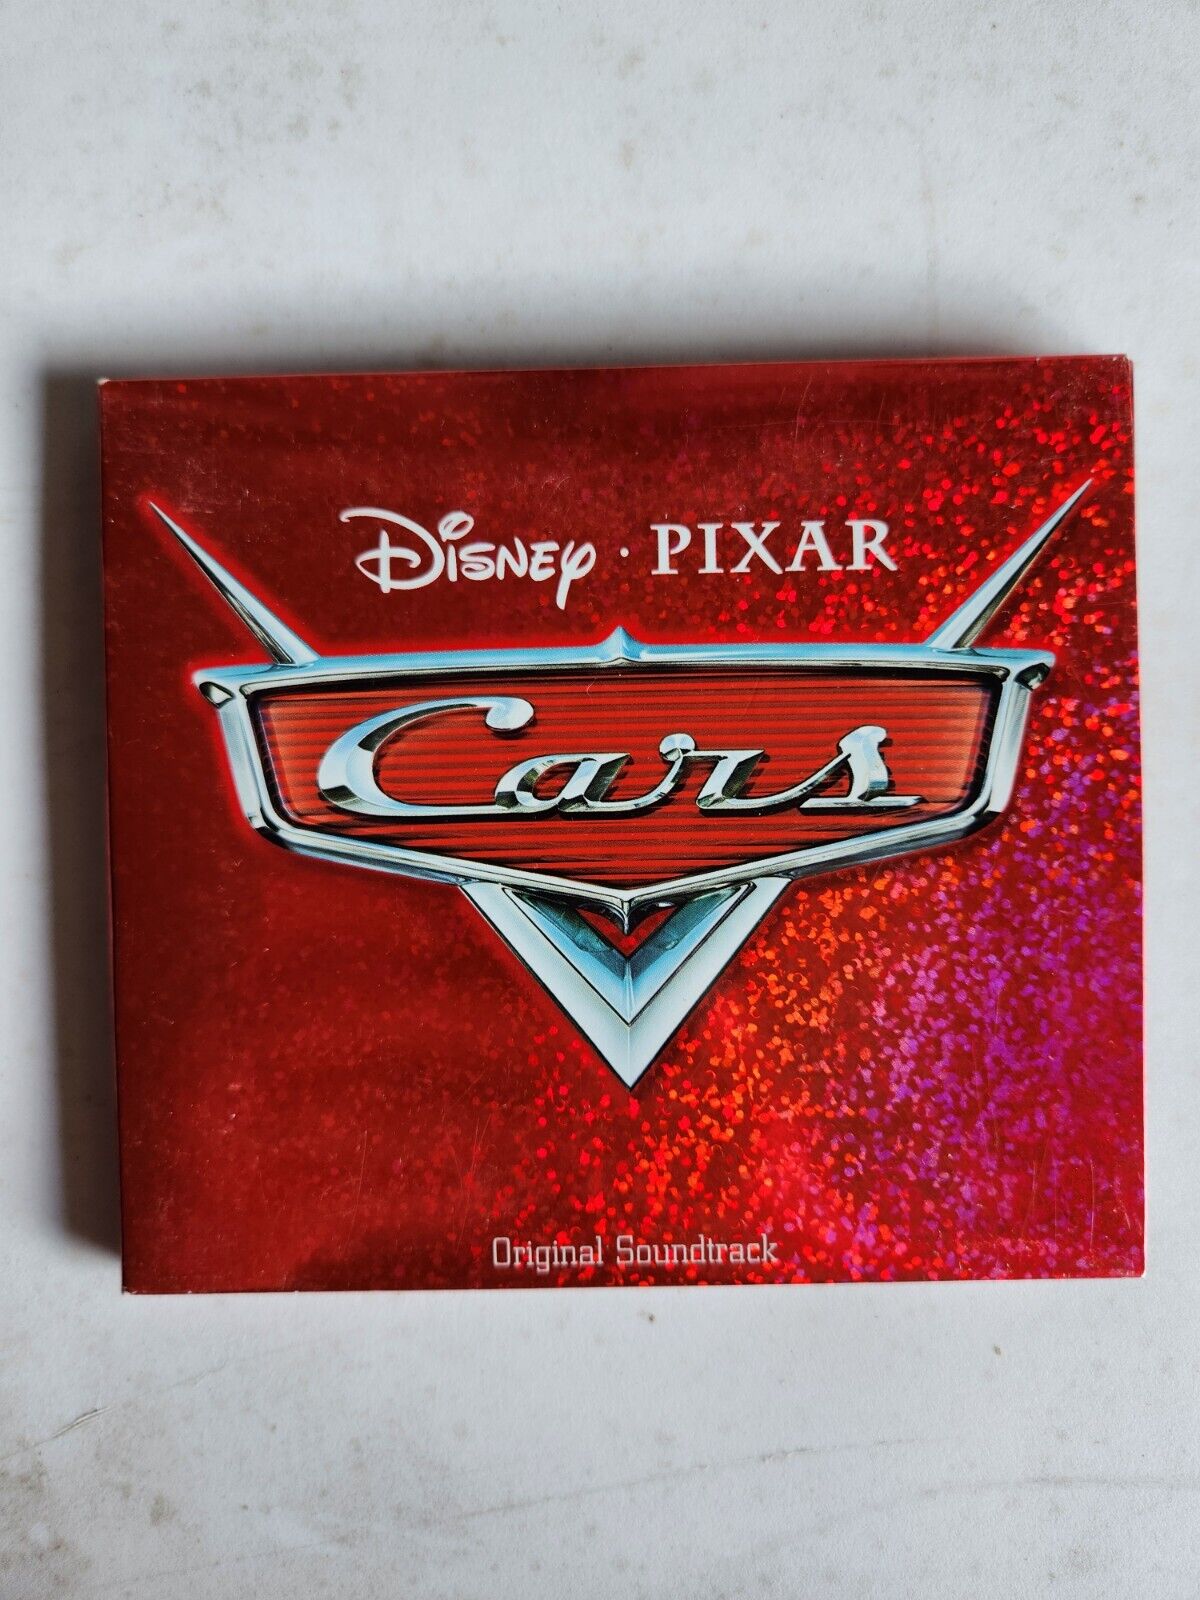 Disney Pixar Cars Movie Original Soundtrack CD W/ Poster 2006 Brad Paisley Etc.